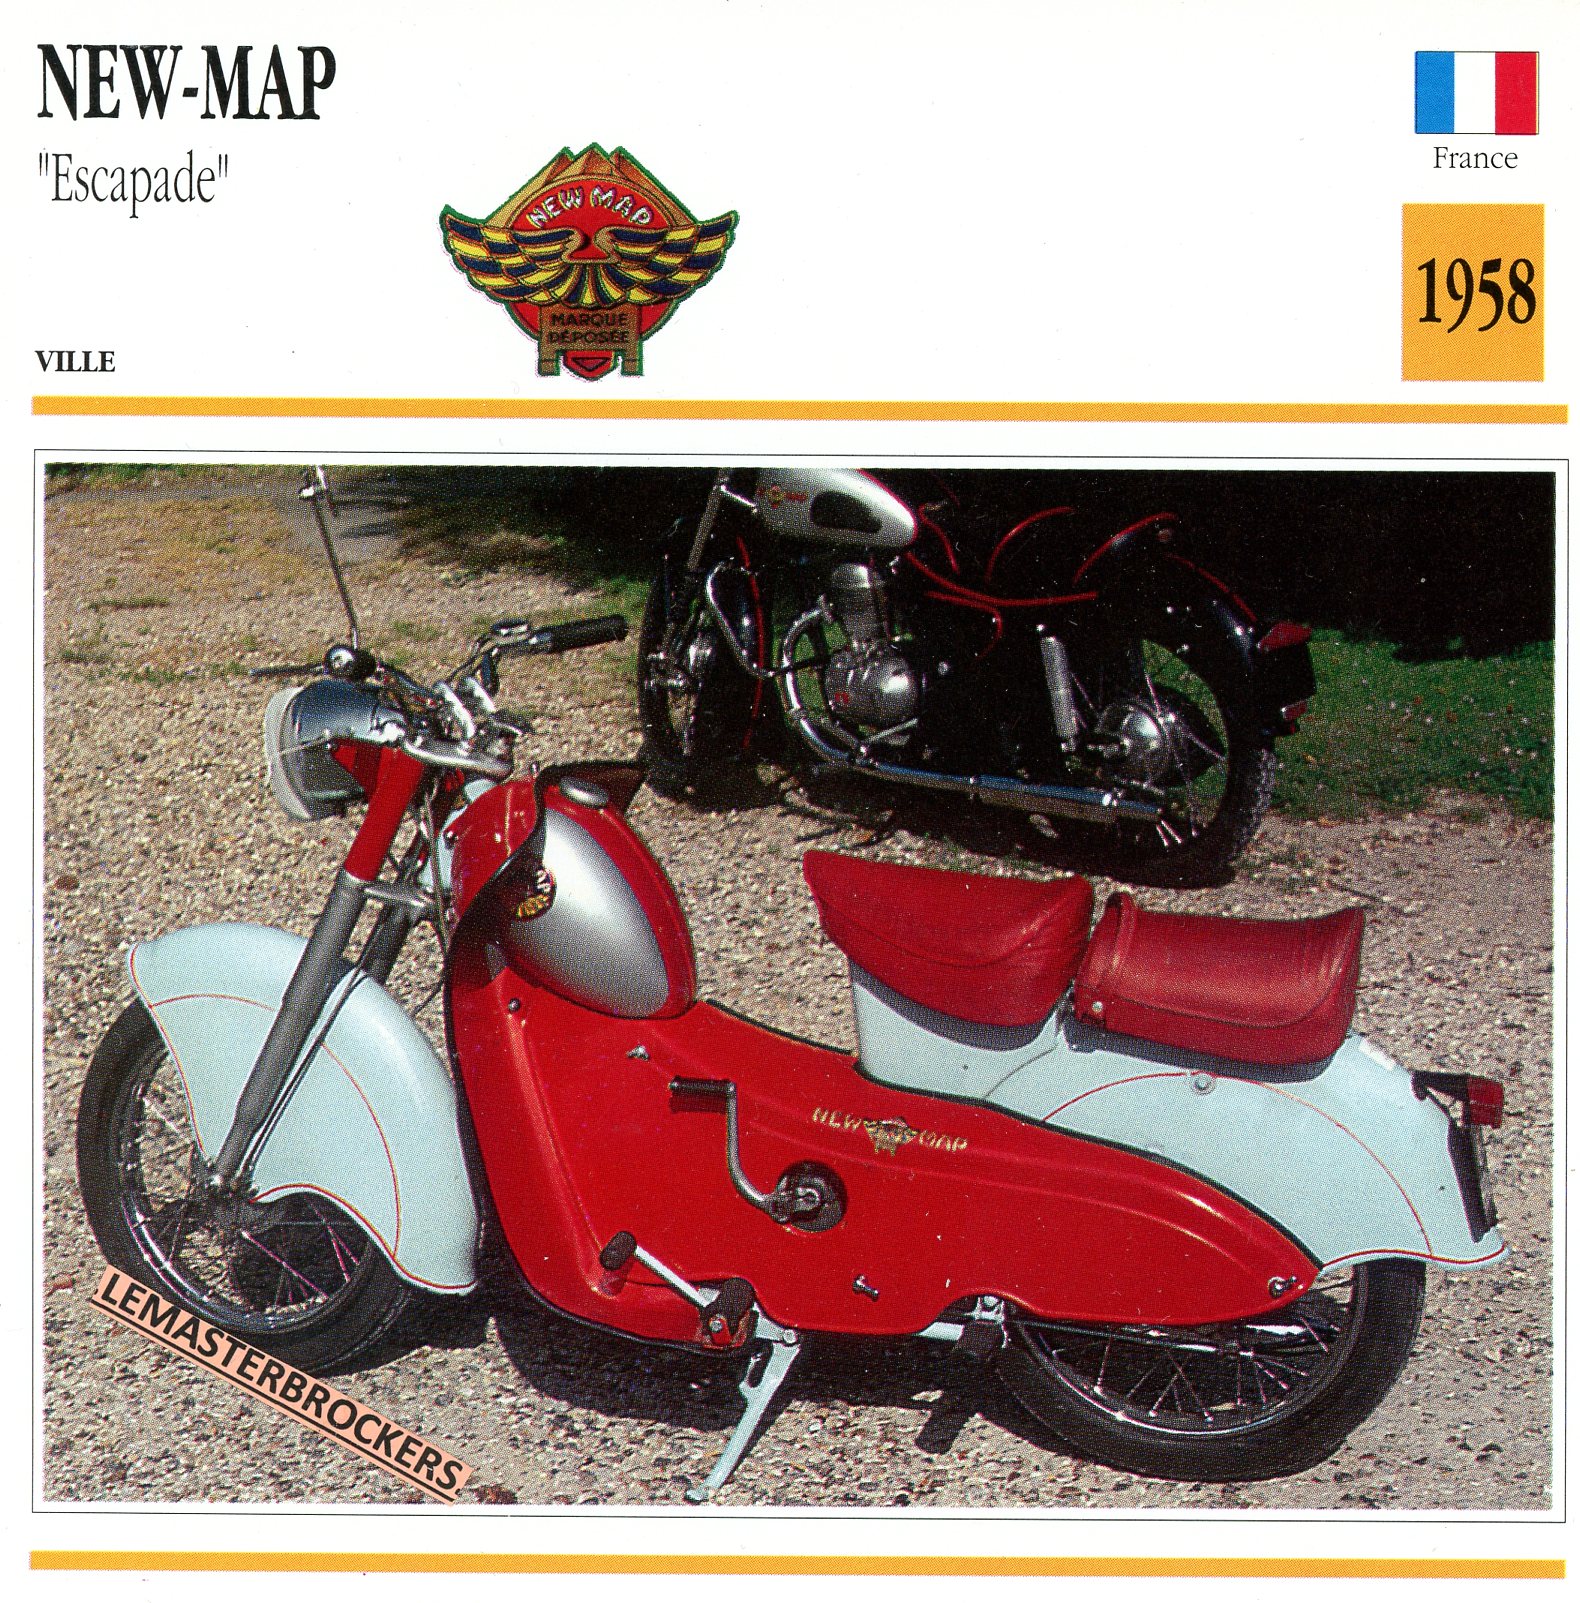 NEW-MPA-ESCAPADE-1958-NEWMAP-FICHE-MOTO-ATLAS-lemasterbrockers-CARD-MOTORCYCLE